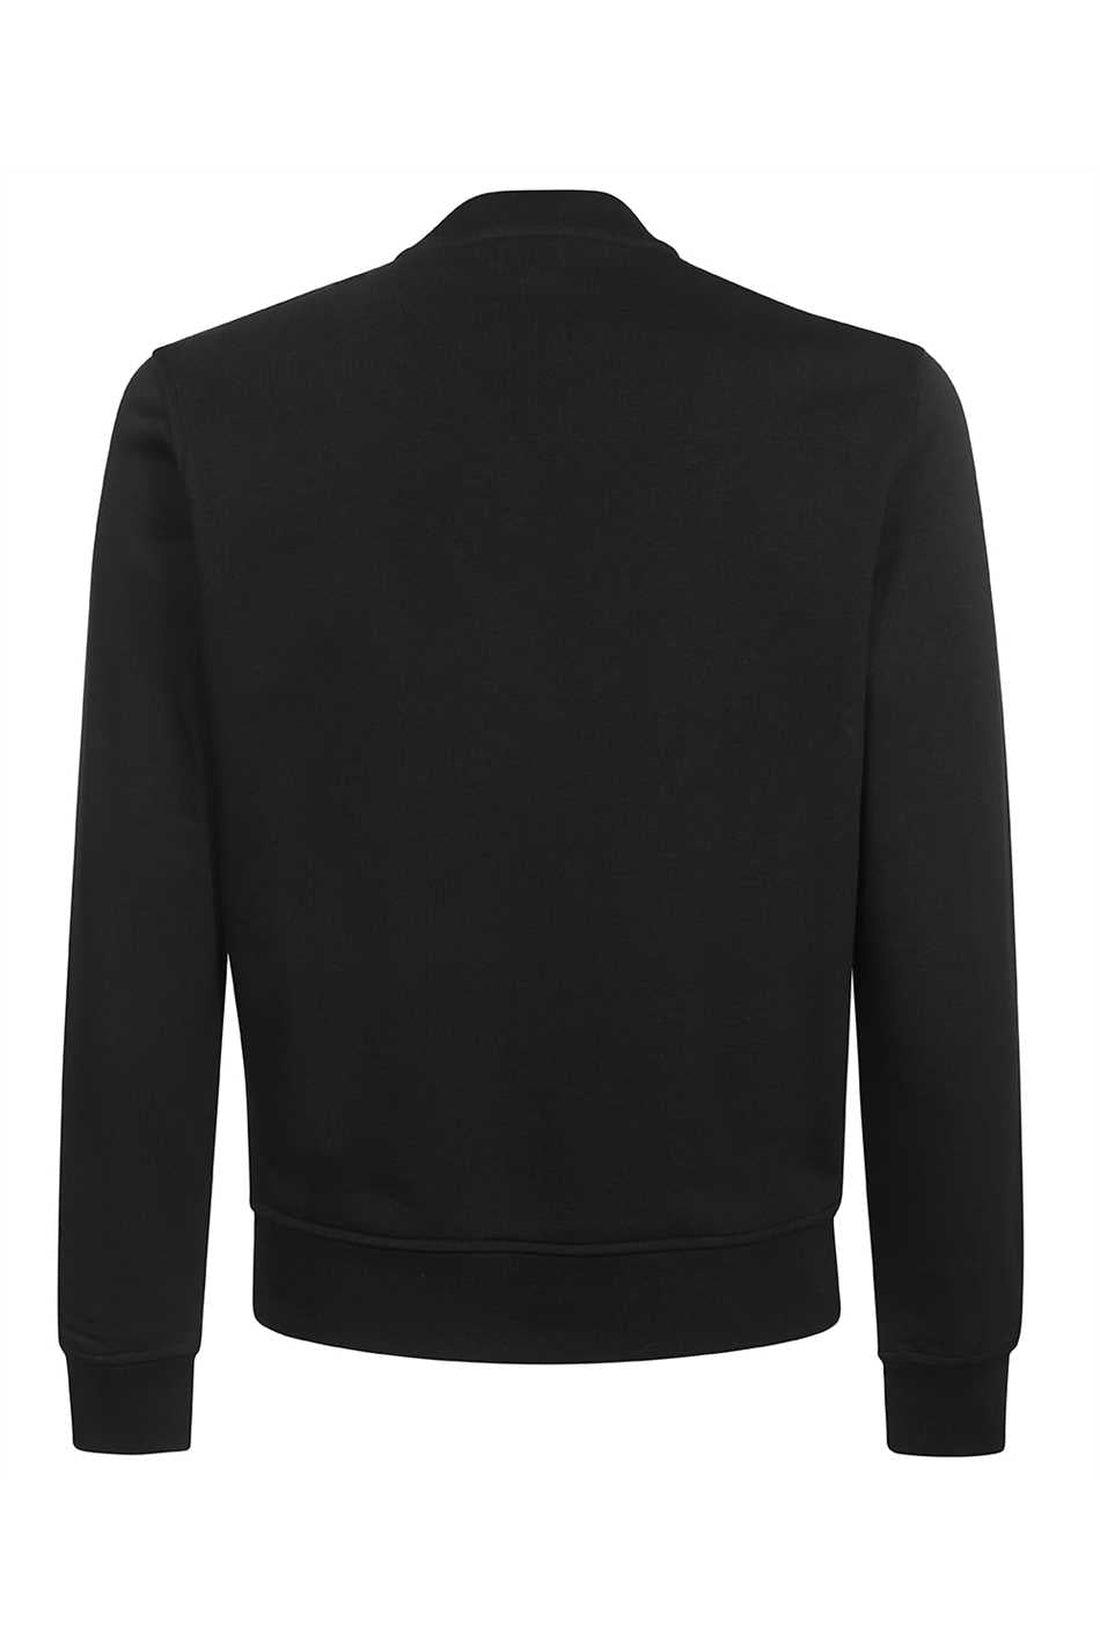 Woolrich-OUTLET-SALE-Embroidered logo crew-neck sweatshirt-ARCHIVIST